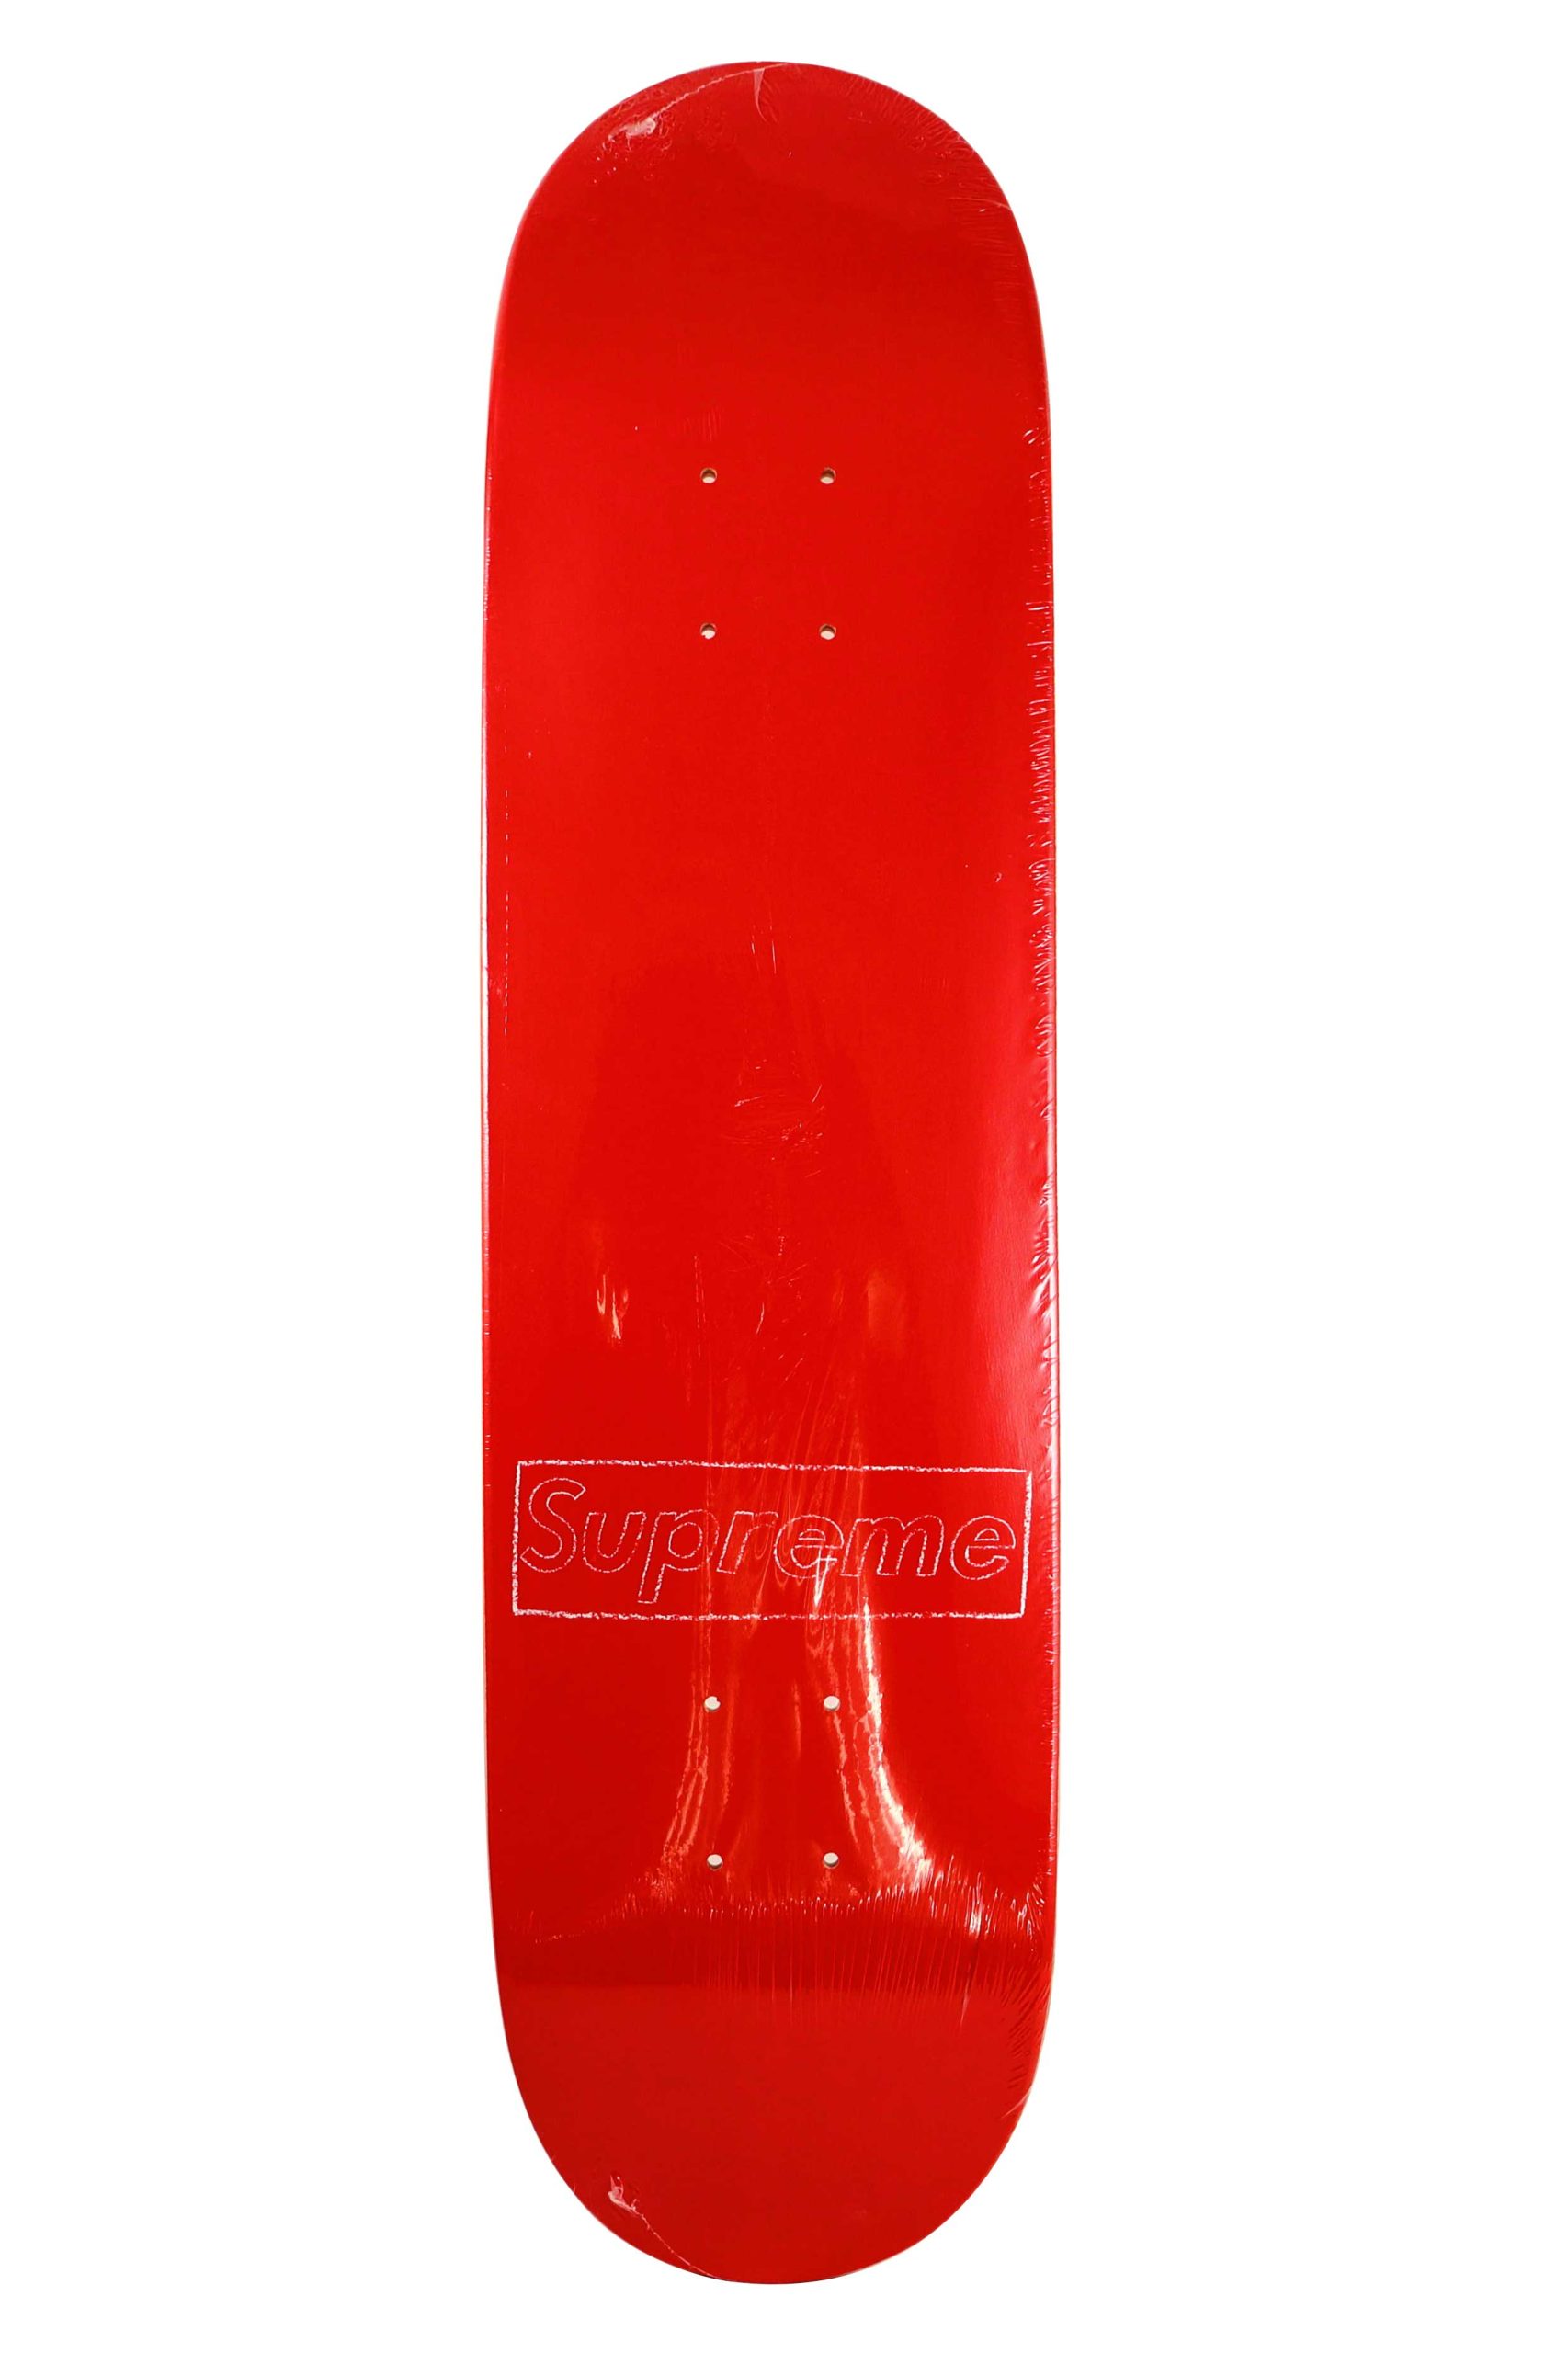 KAWS x Supreme Box Logo Skateboard Skate Deck Red - artistskateboard.com